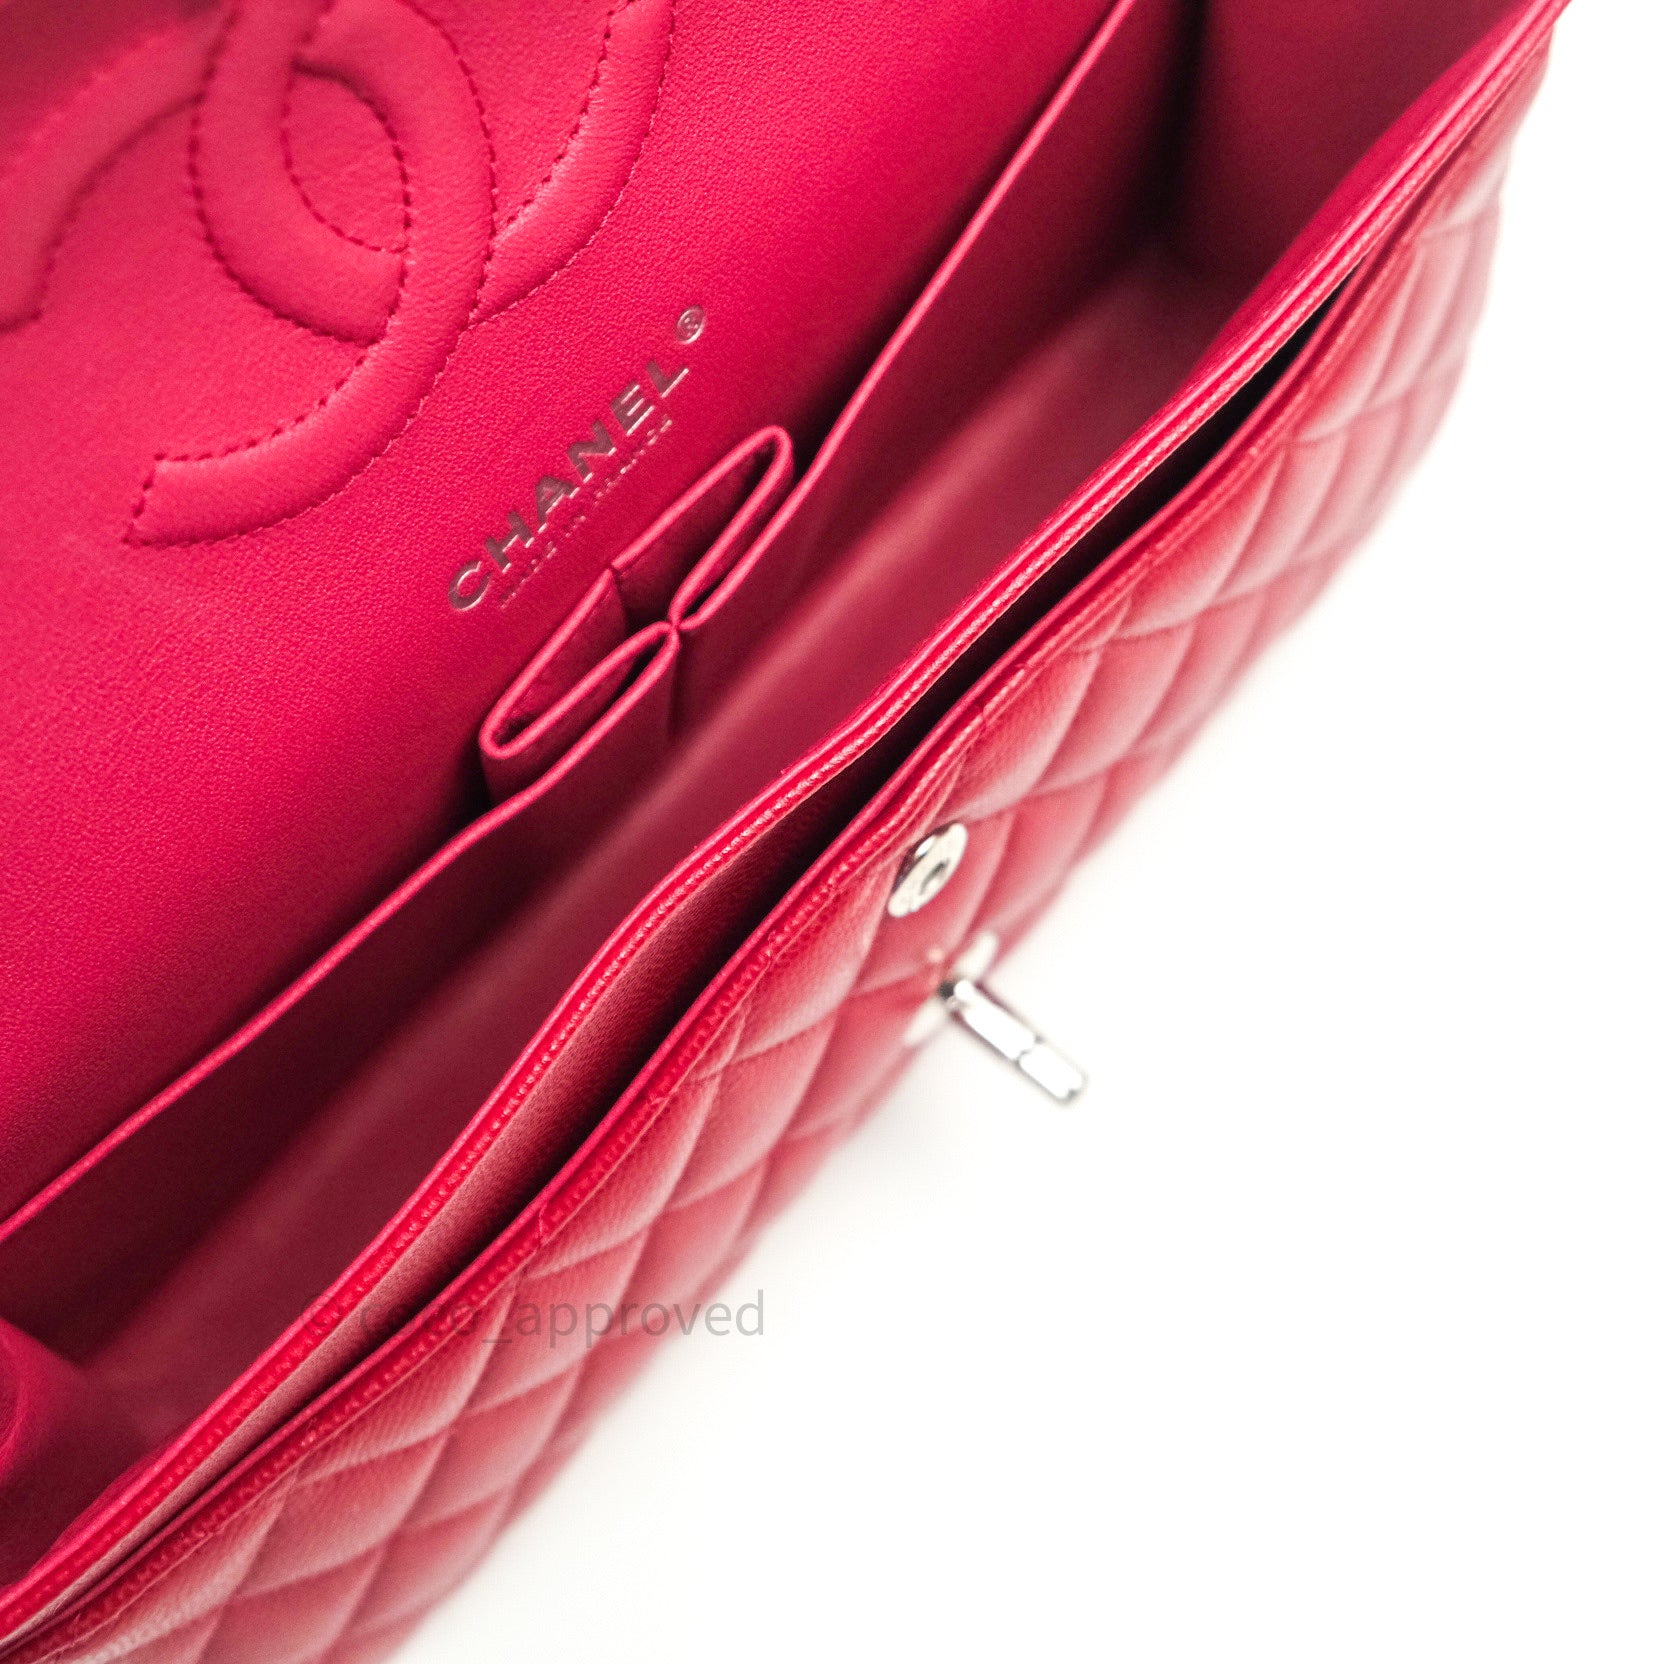 Chanel Medium Classic lined Flap Bag Orange Leather ref.607088